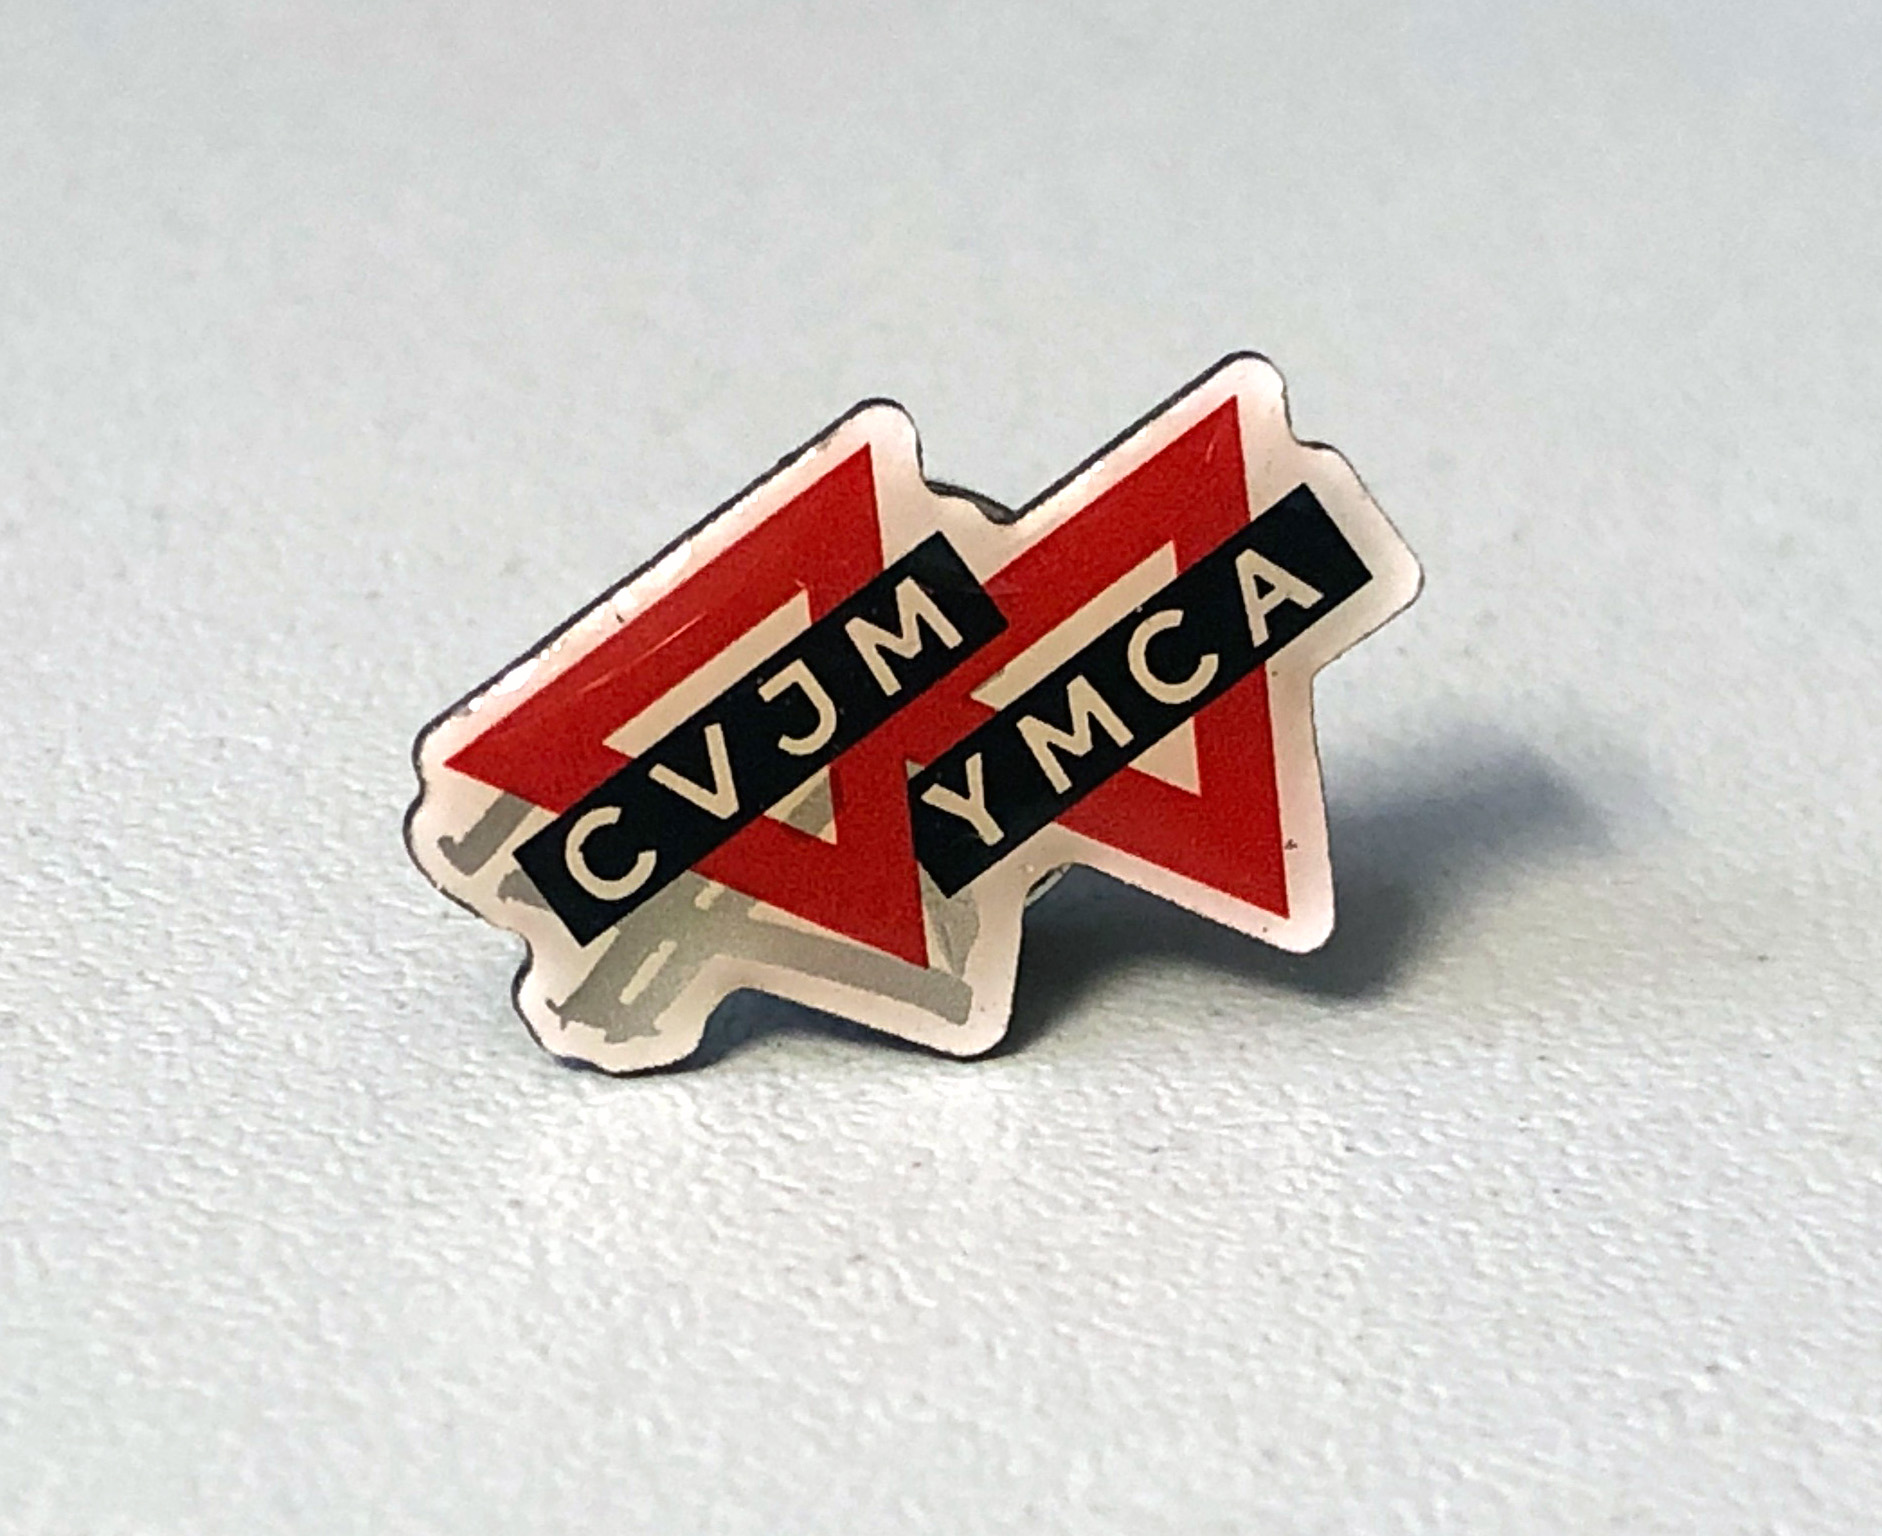 CVJM/YMCA-Pin